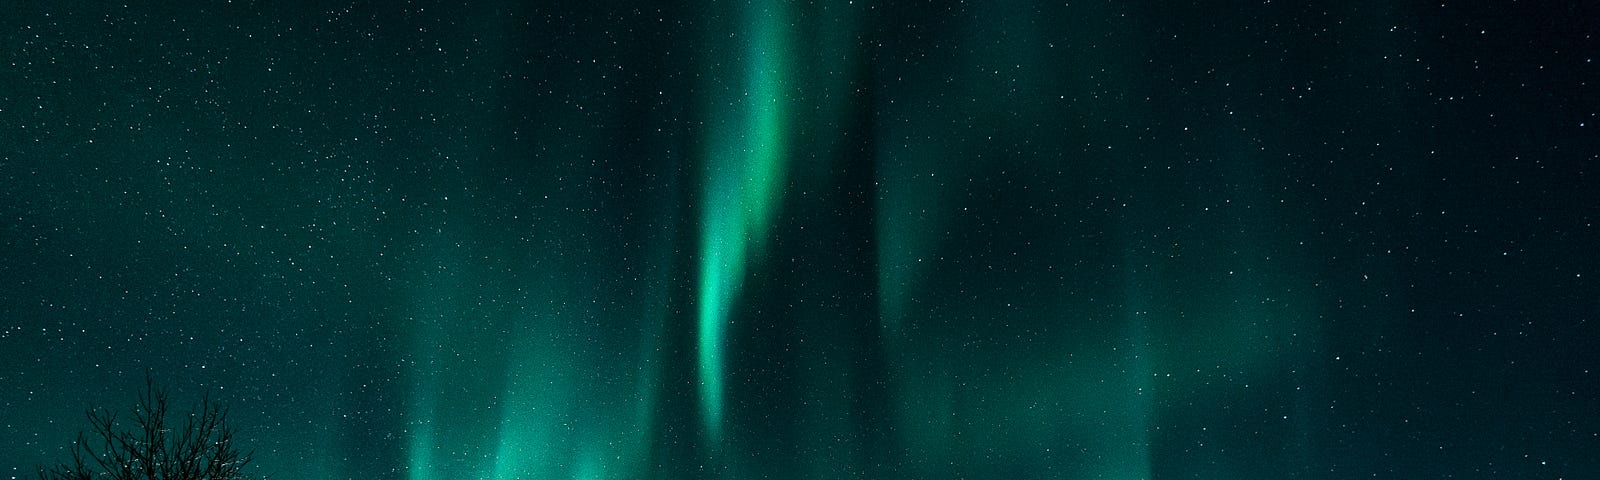 Green aurora in night sky.